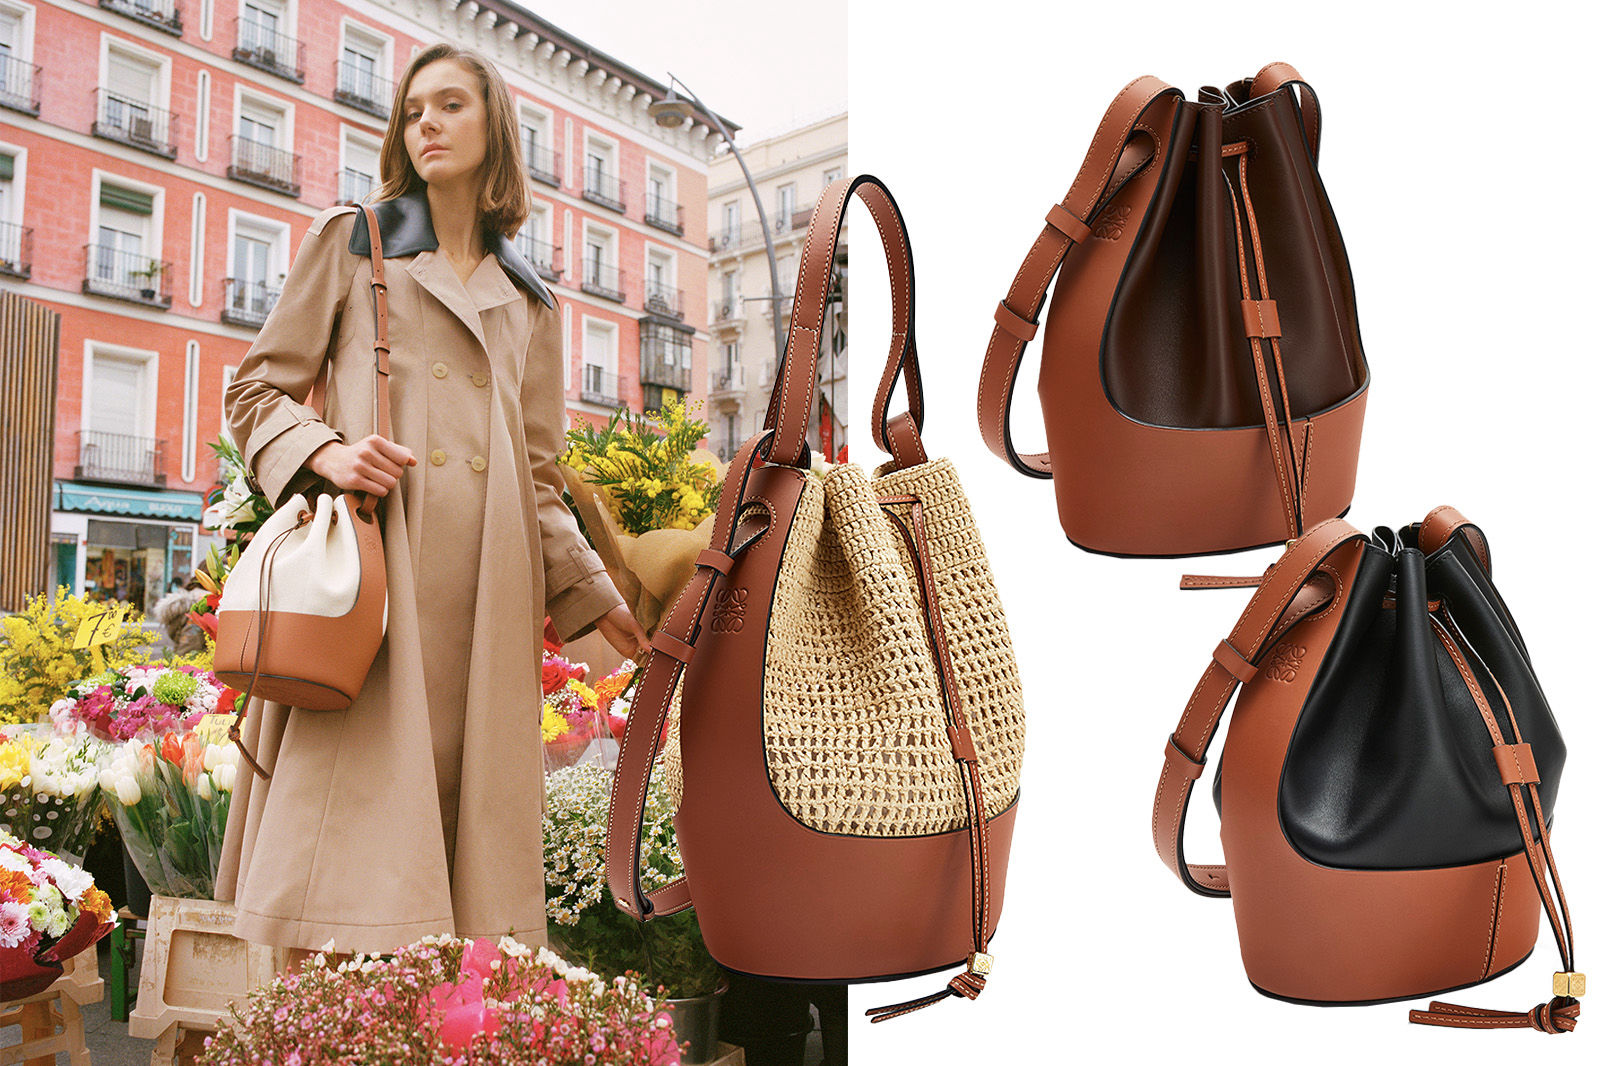 Designer Summer Bags From Loewe and Celine 